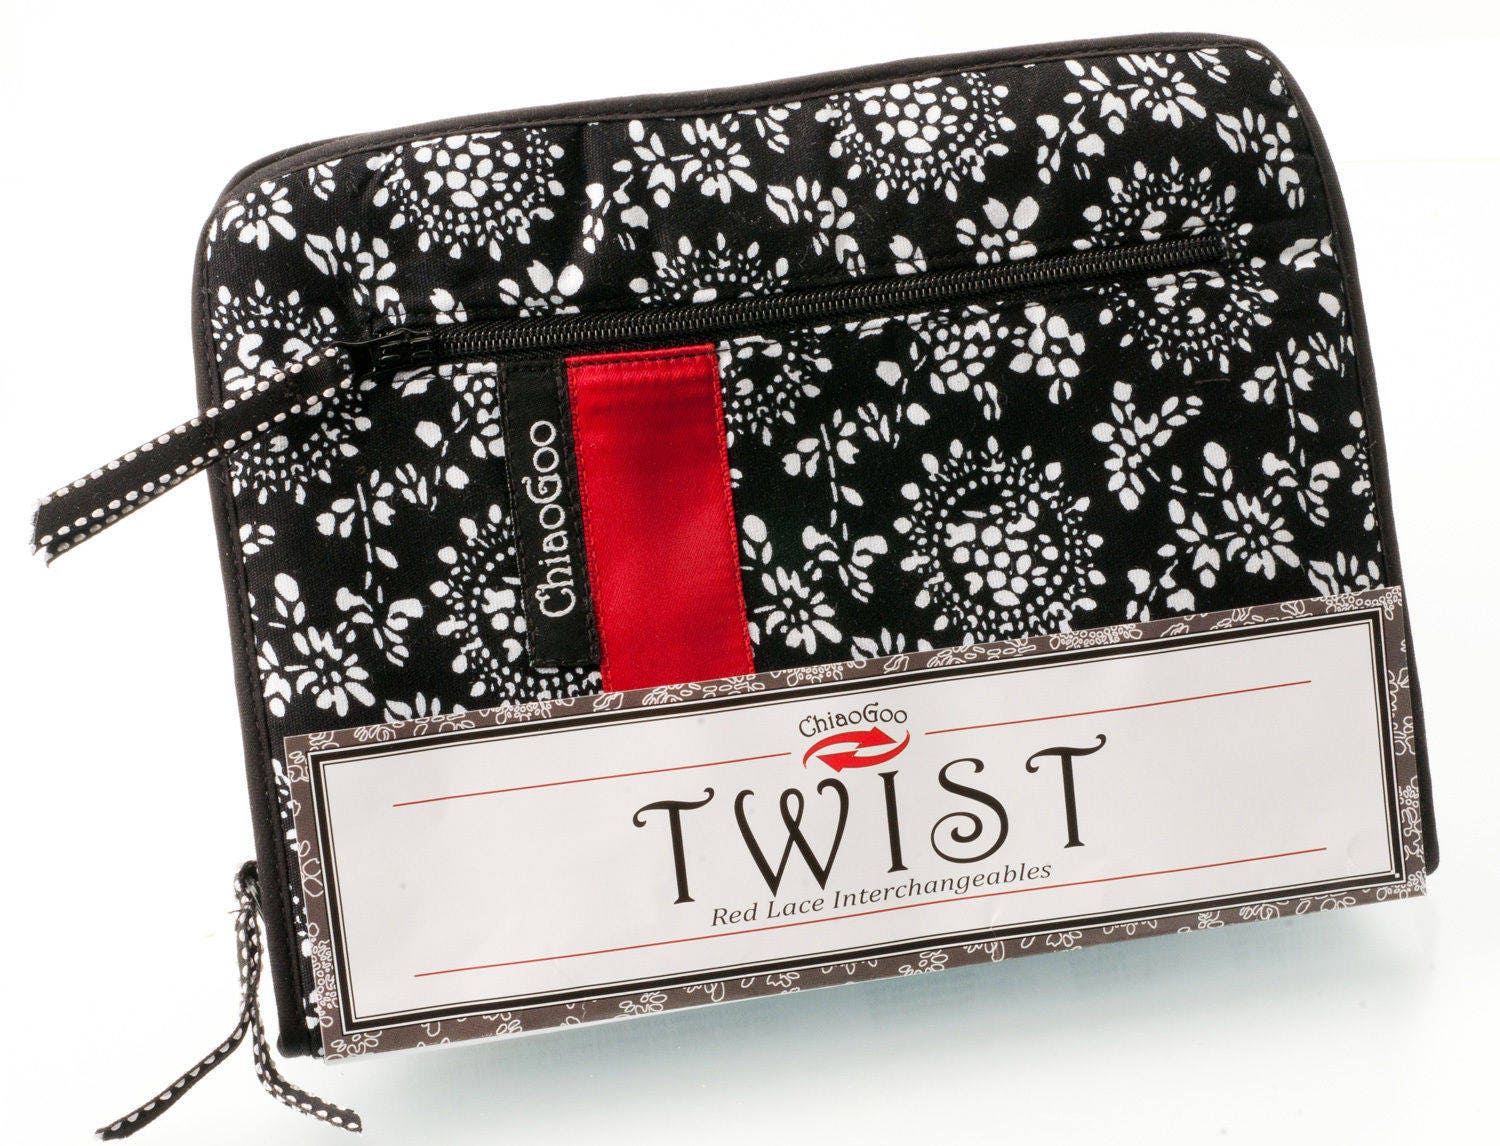 ChiaoGoo TWIST 5-Inch Red Lace Stainless Steel Interchangeable Knittin